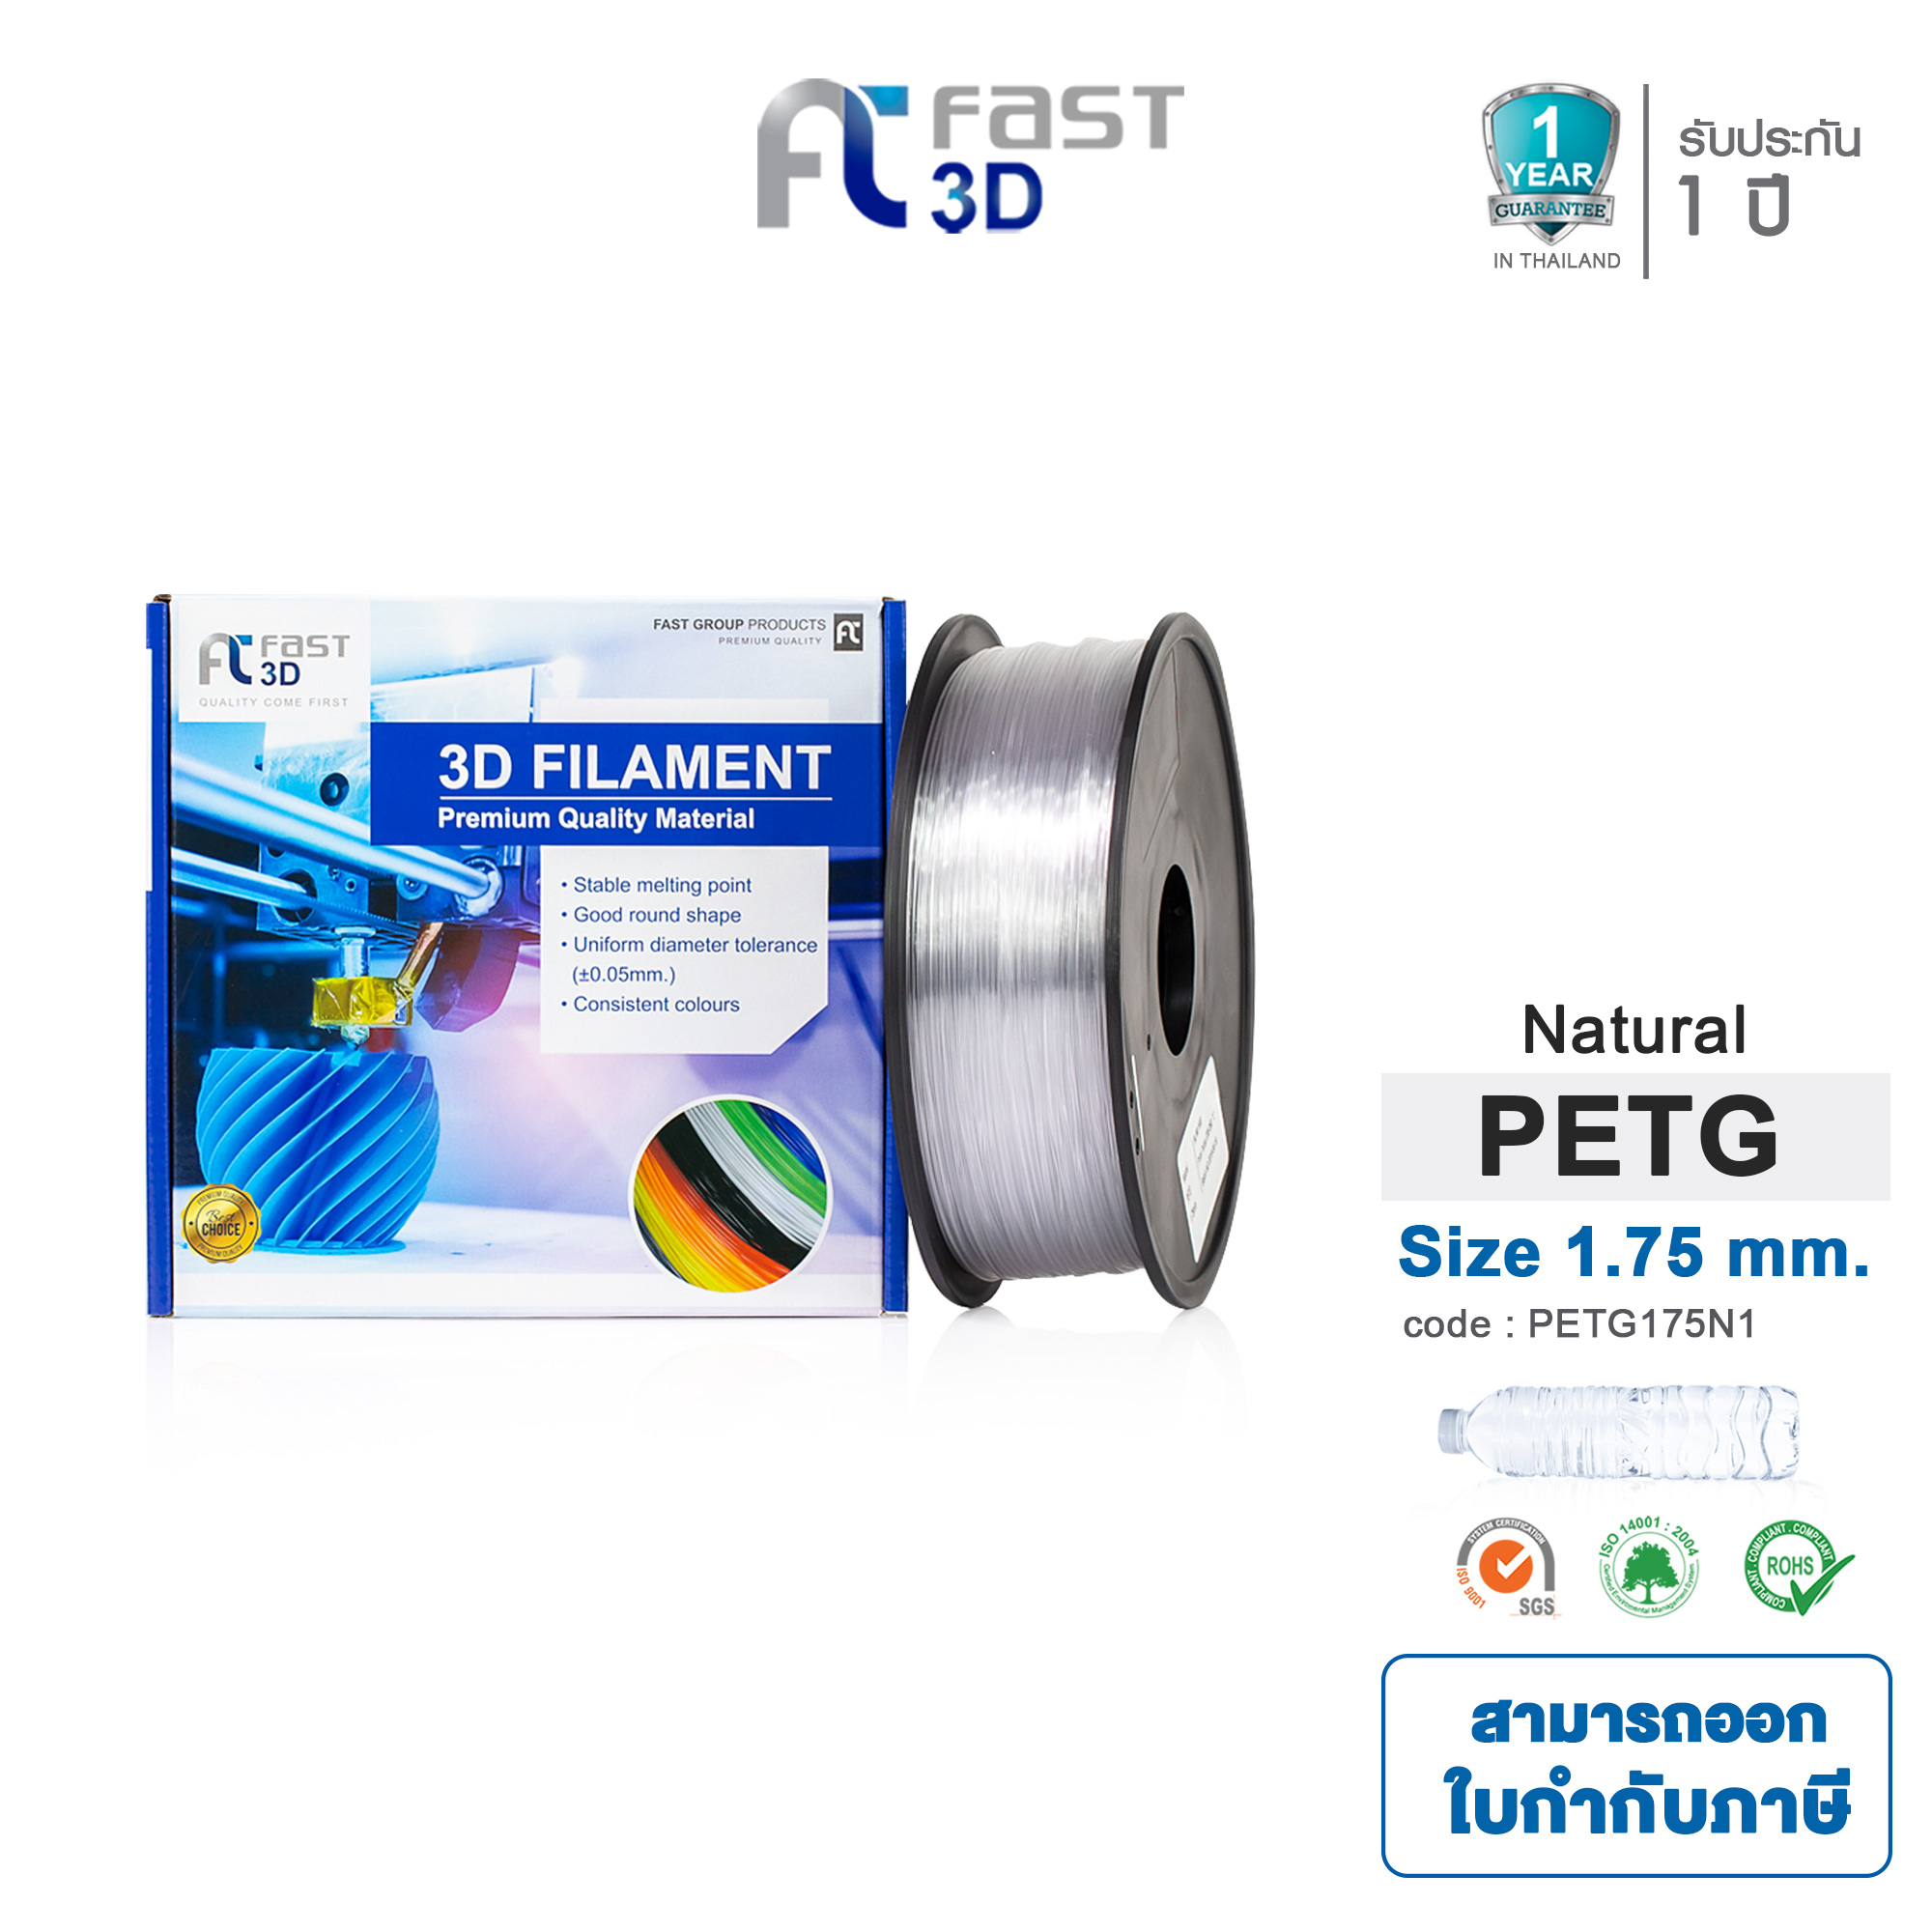 Fast 3D เส้นใยพลาสติก PETG Filament for 3D Printer Size 1.75 mm. 1 kg. Natural [ จัดส่งฟรี!! ]